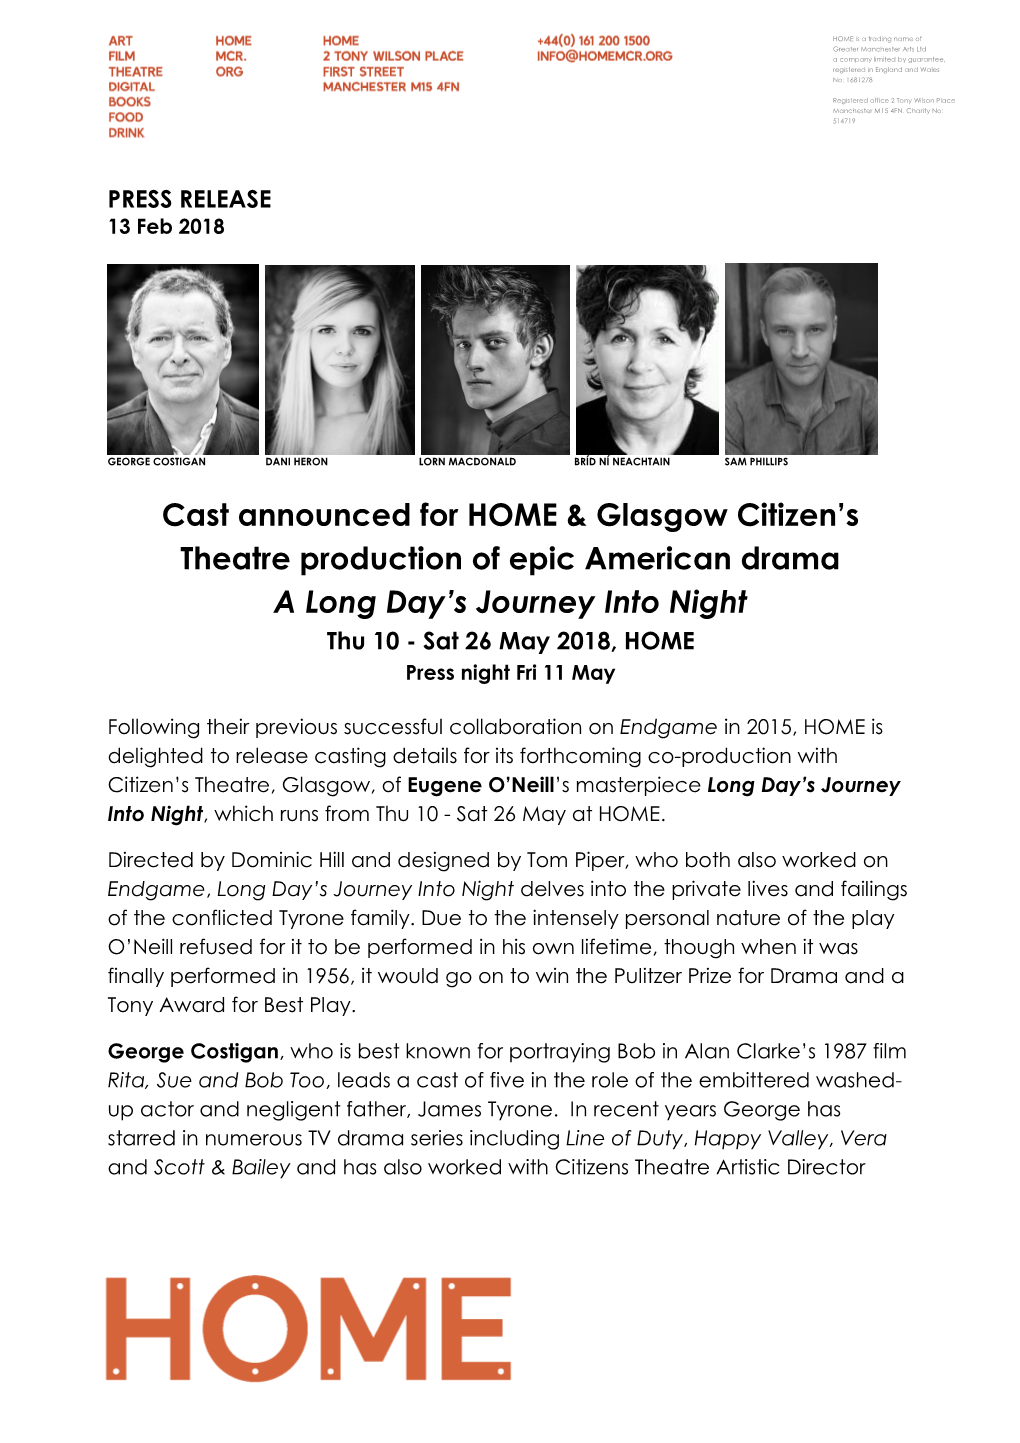 Cast Announced for HOME & Glasgow Citizen's Theatre Production of Epic